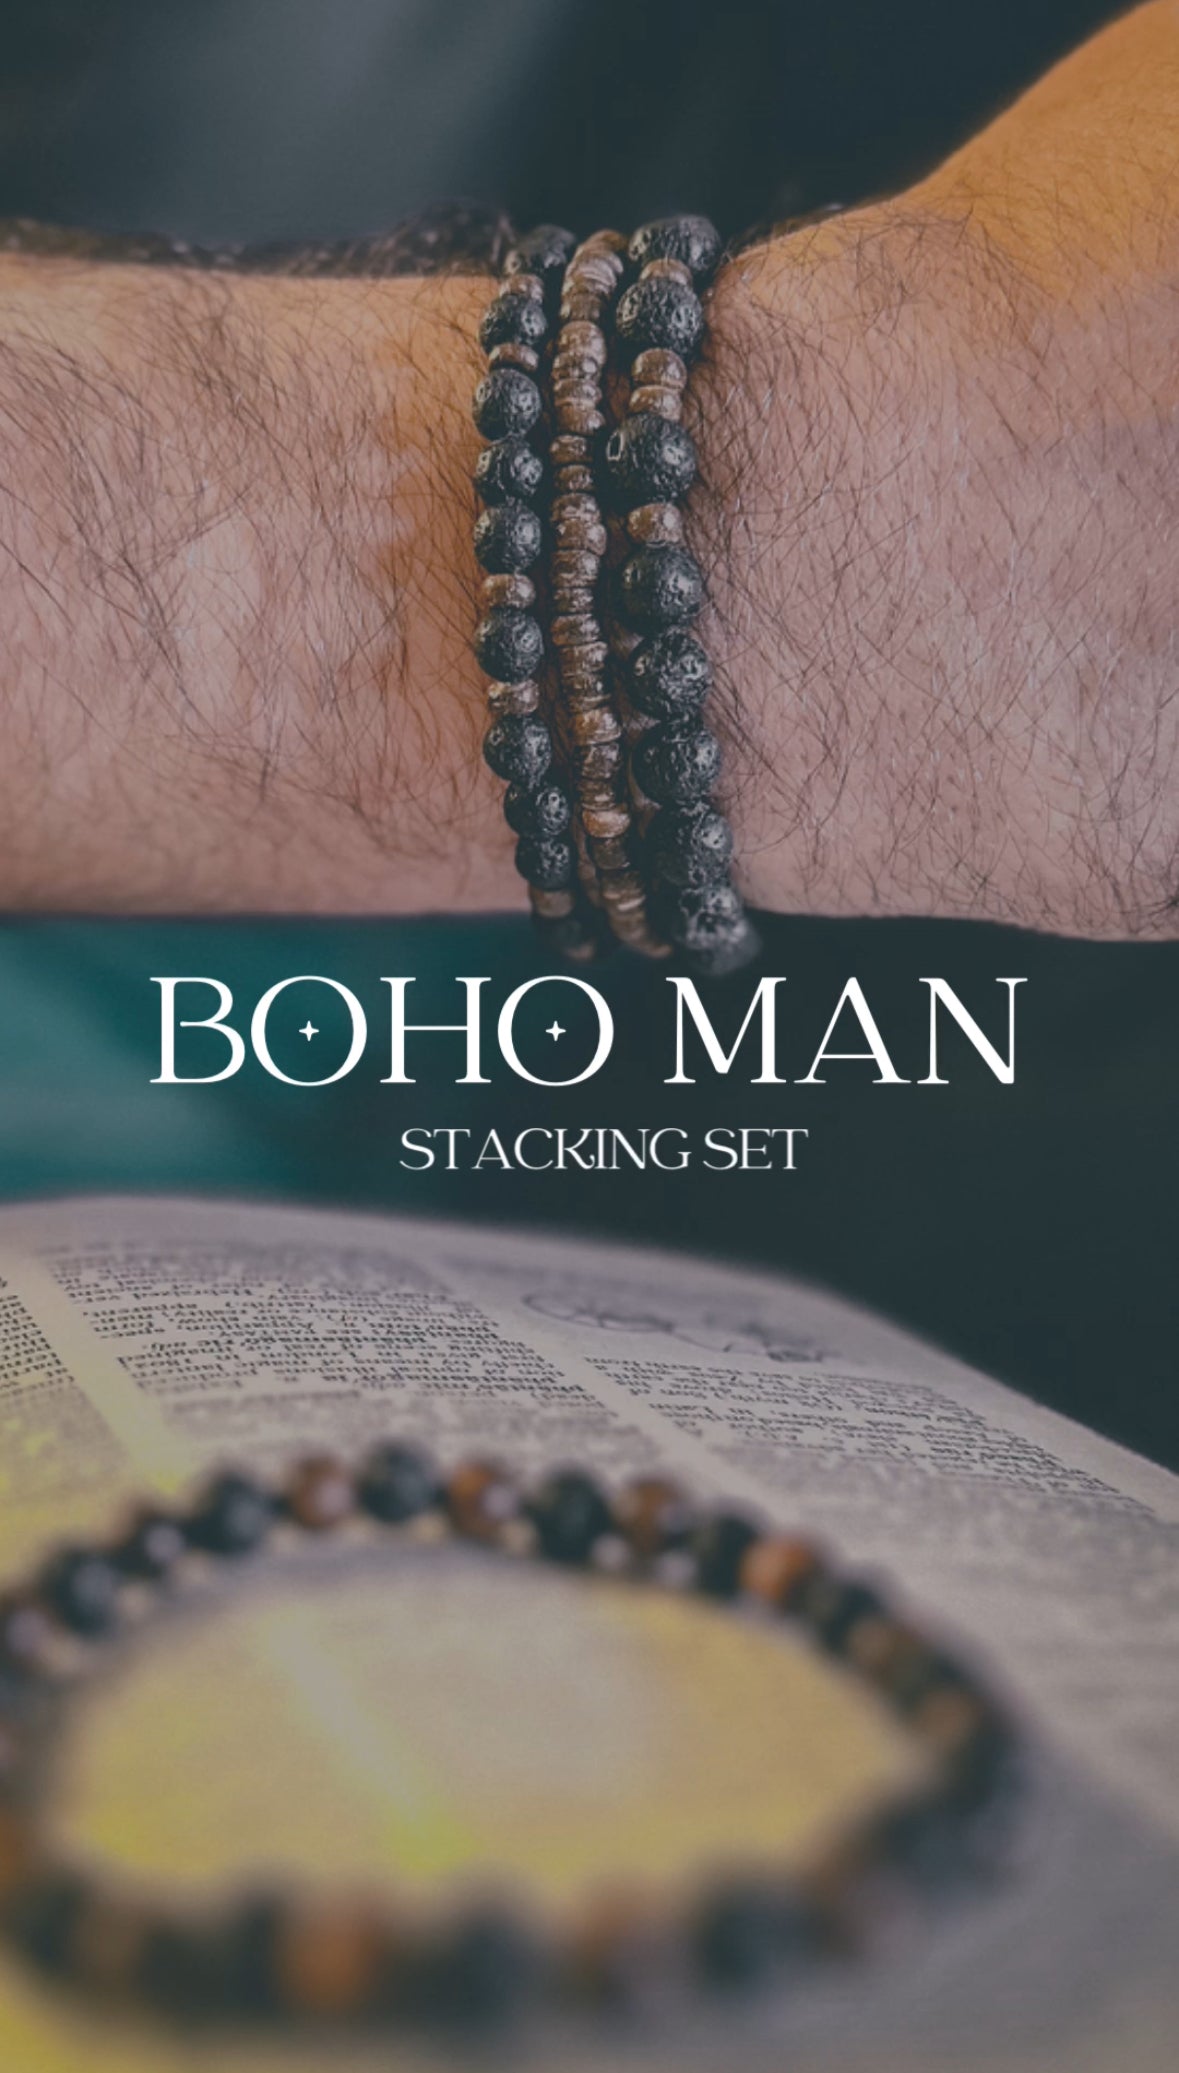 The Boho Man Stack